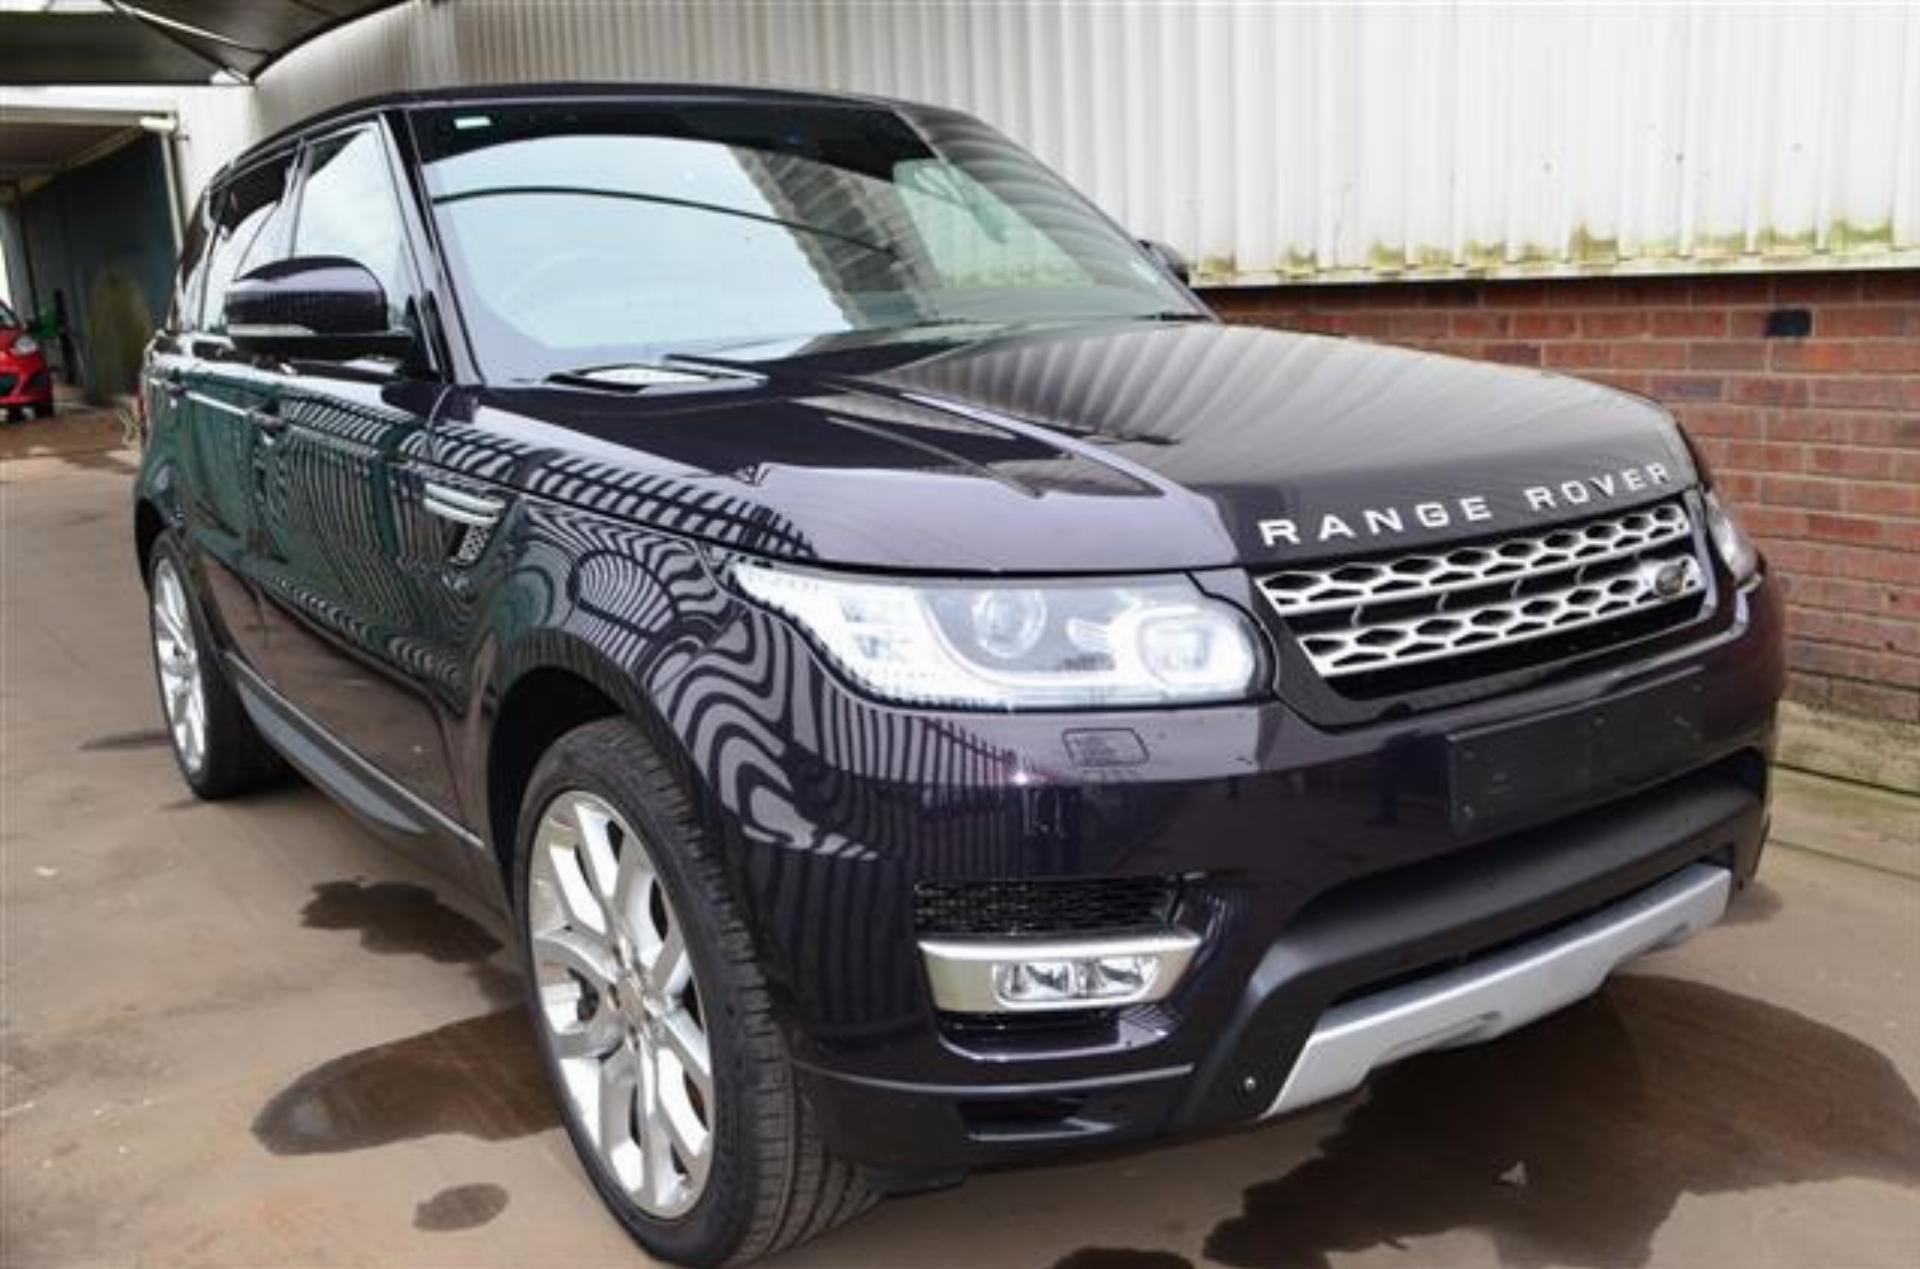 Repossessed Land Rover Range Rover Sport 2014 on auction - MC45809